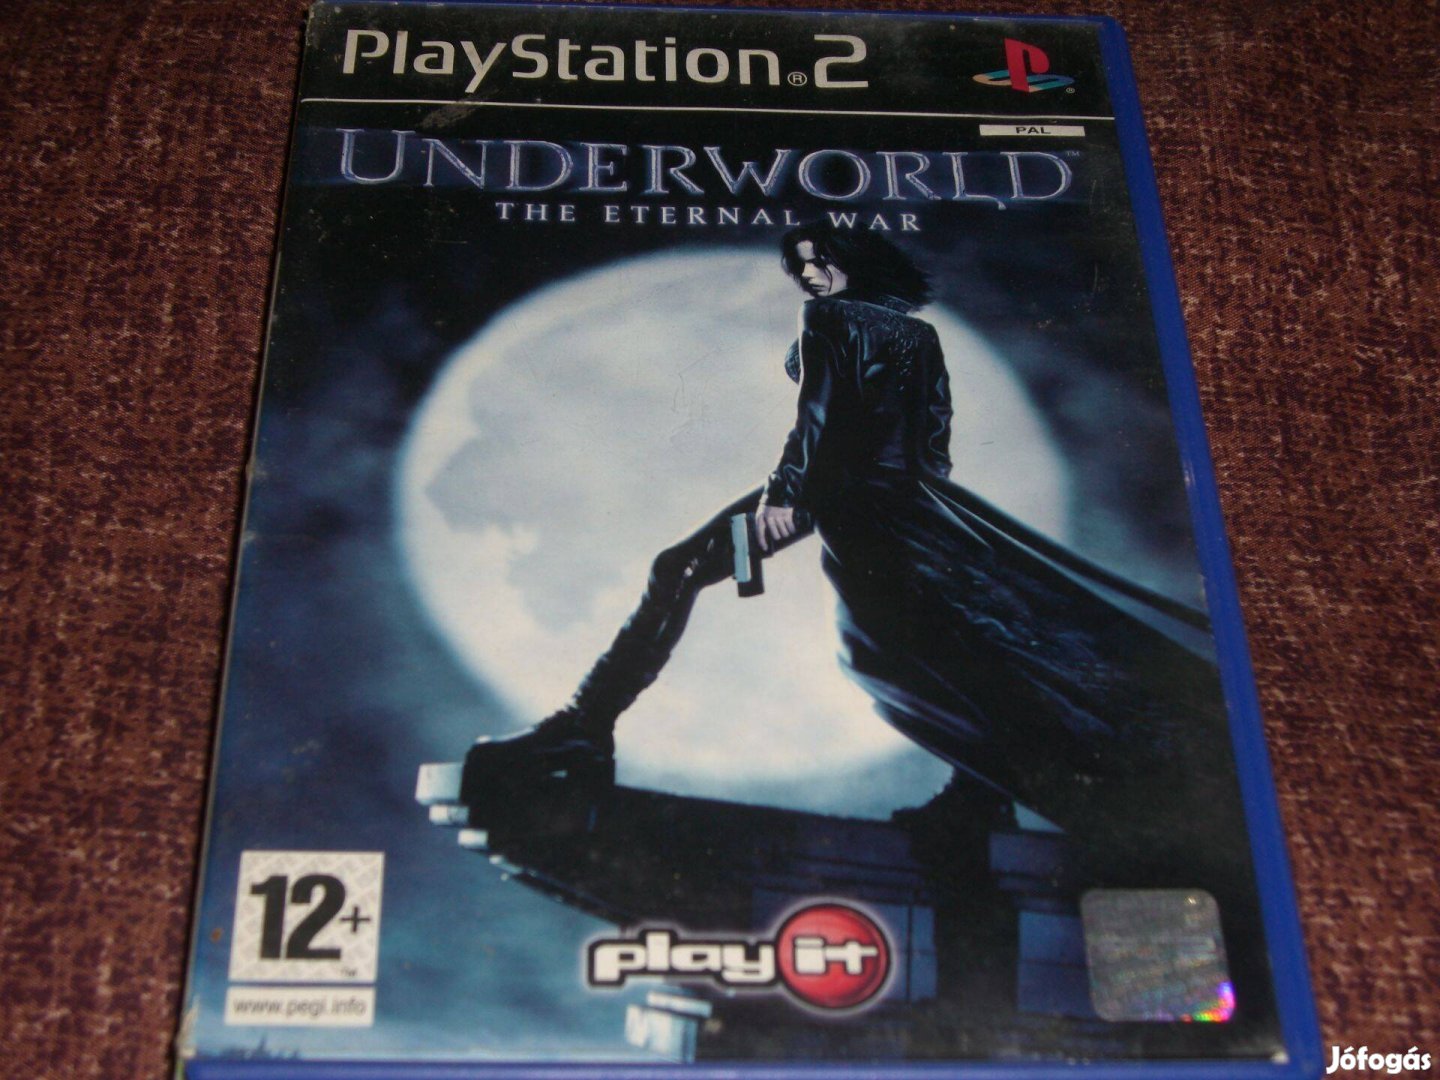 Underworld Playstation 2 eredeti lemez ( 3500 Ft )